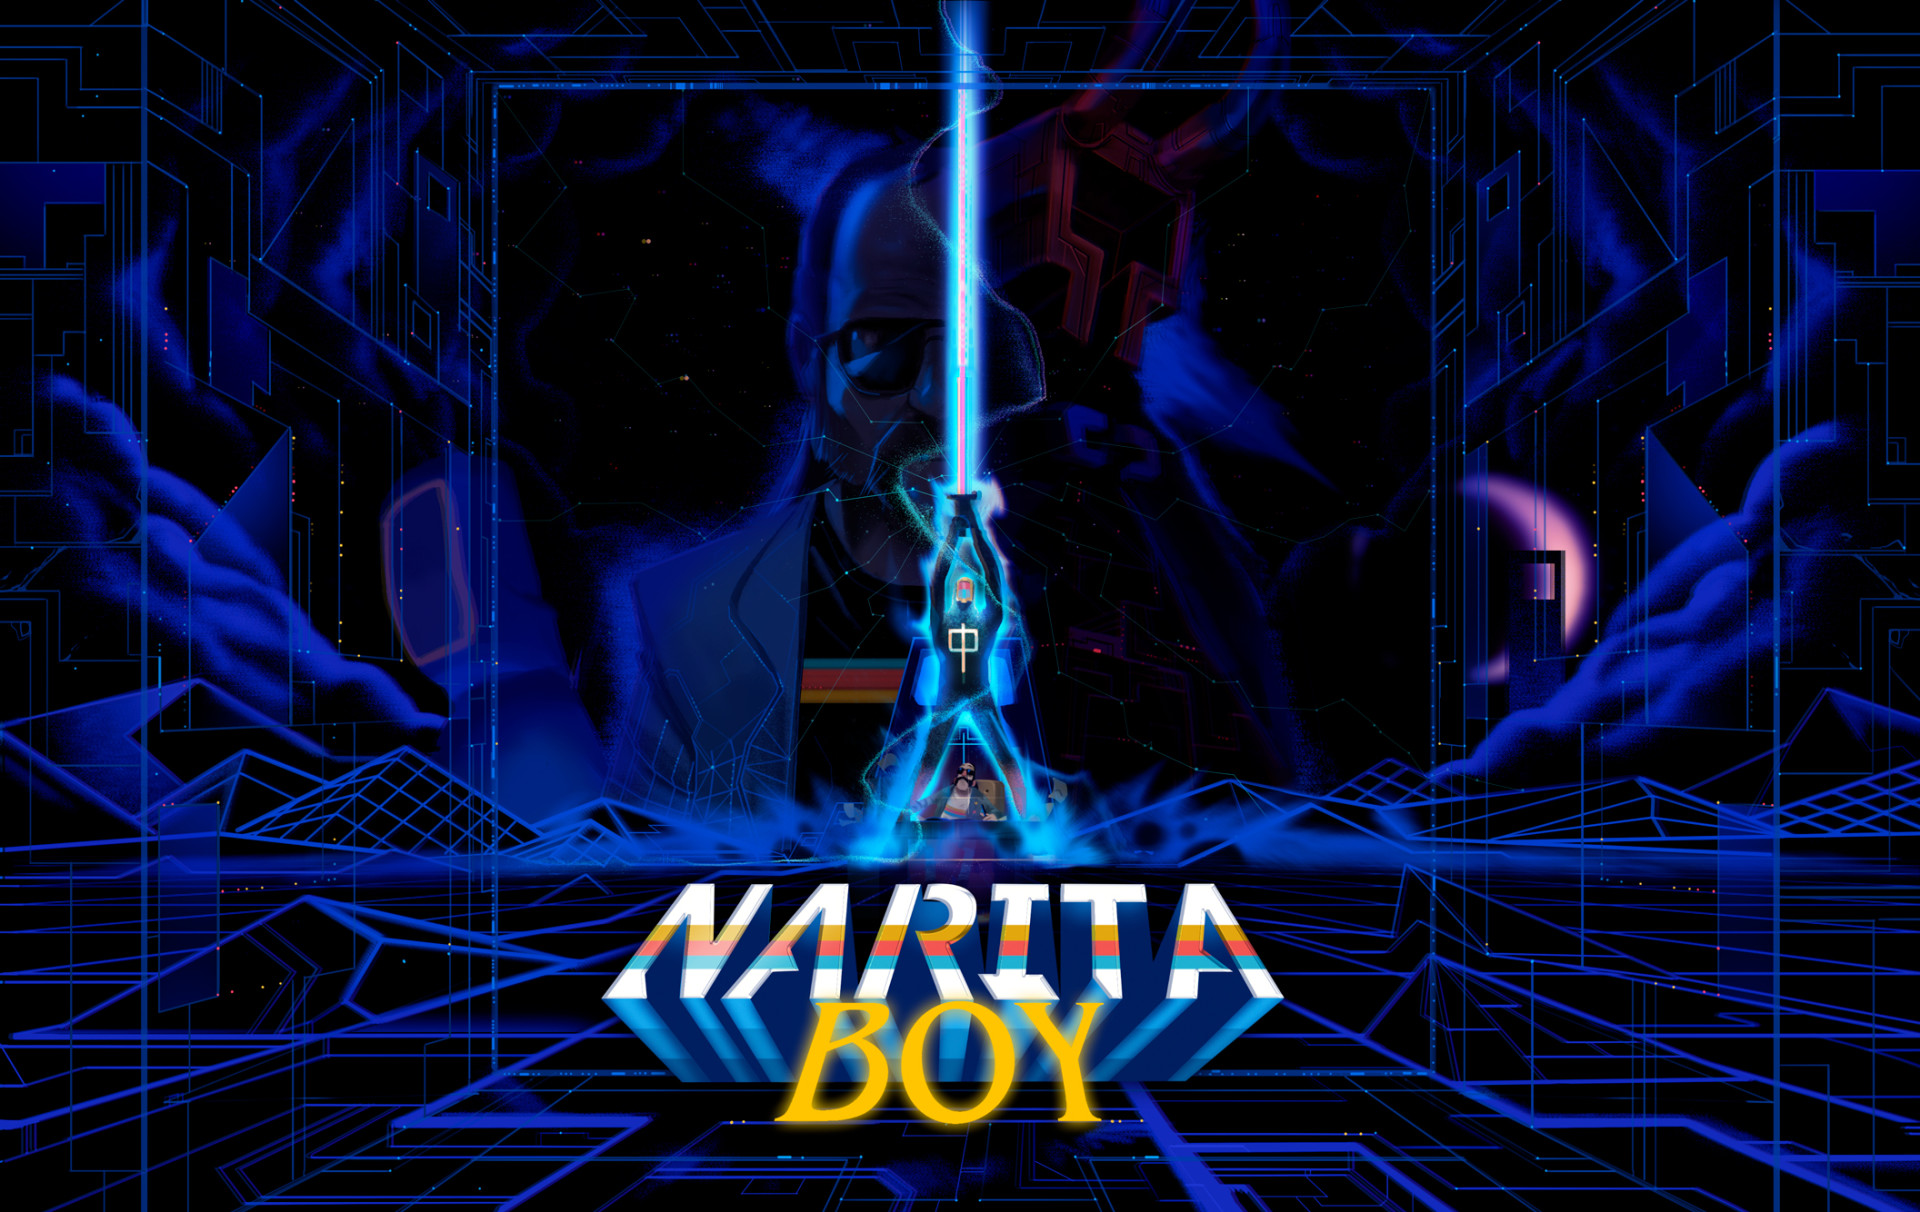 narita boy achievement guide